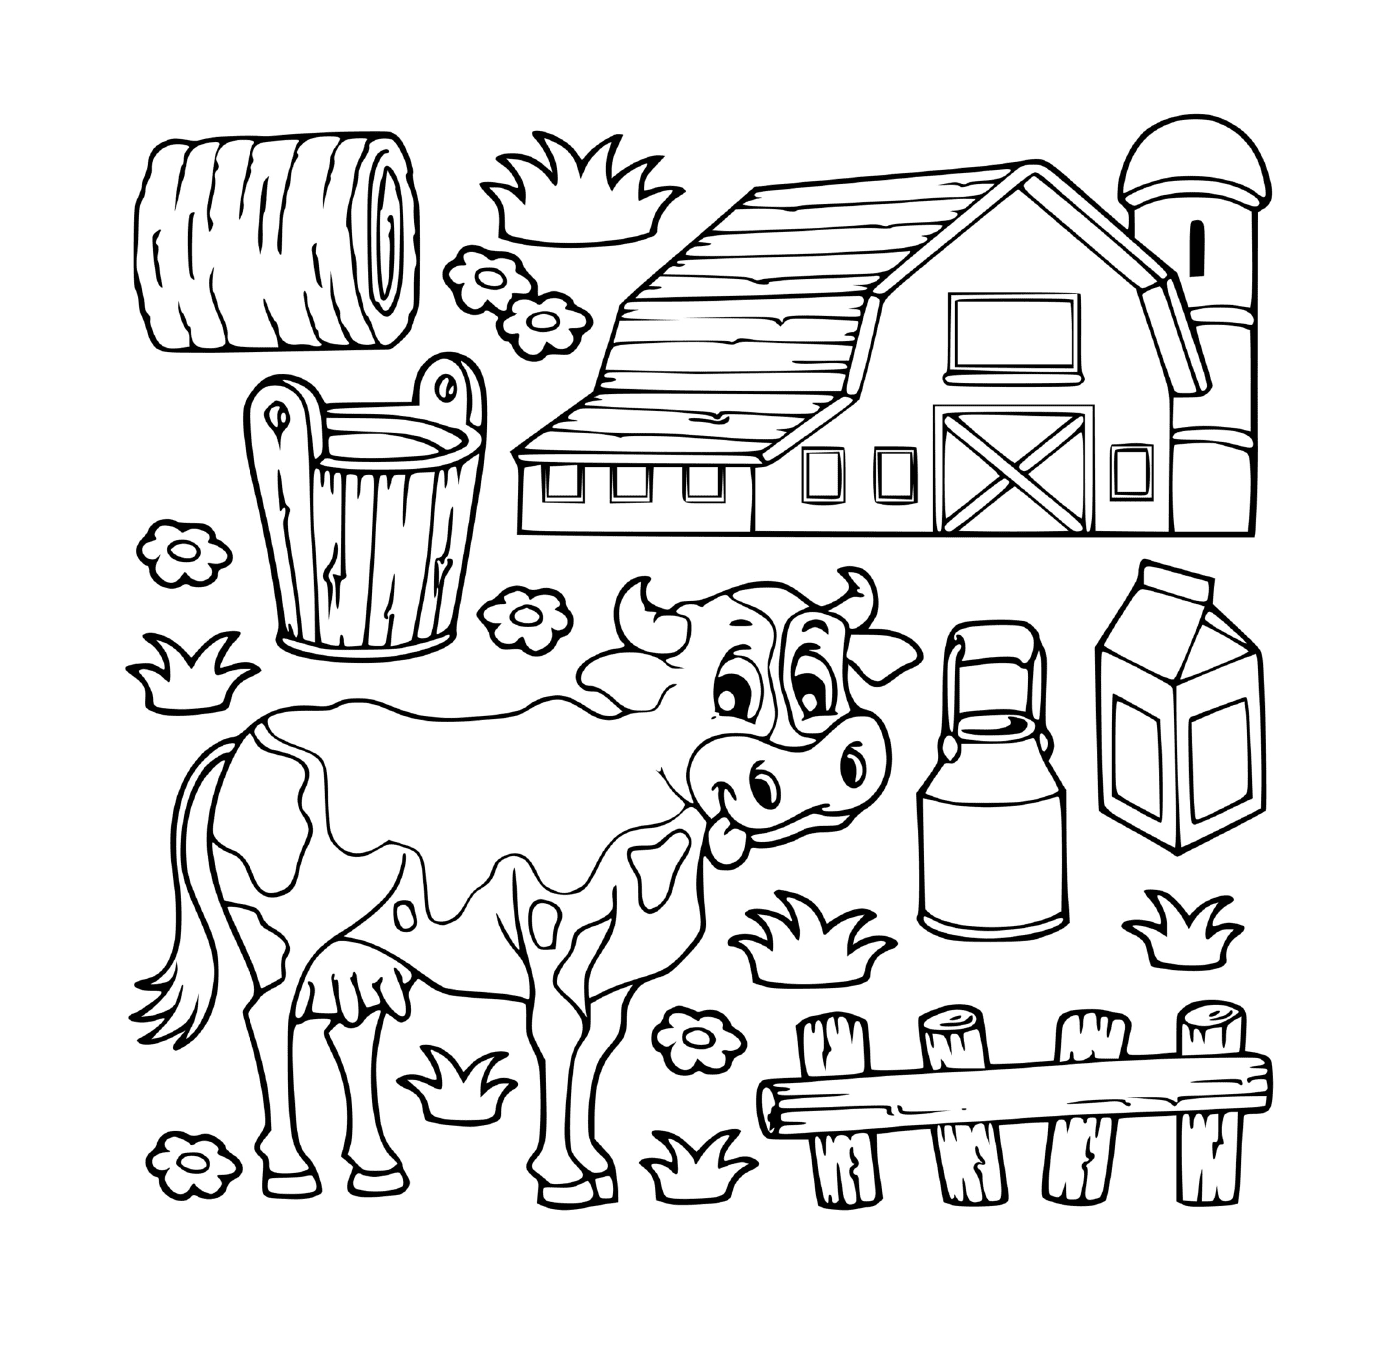  Dairy cow on a farm 